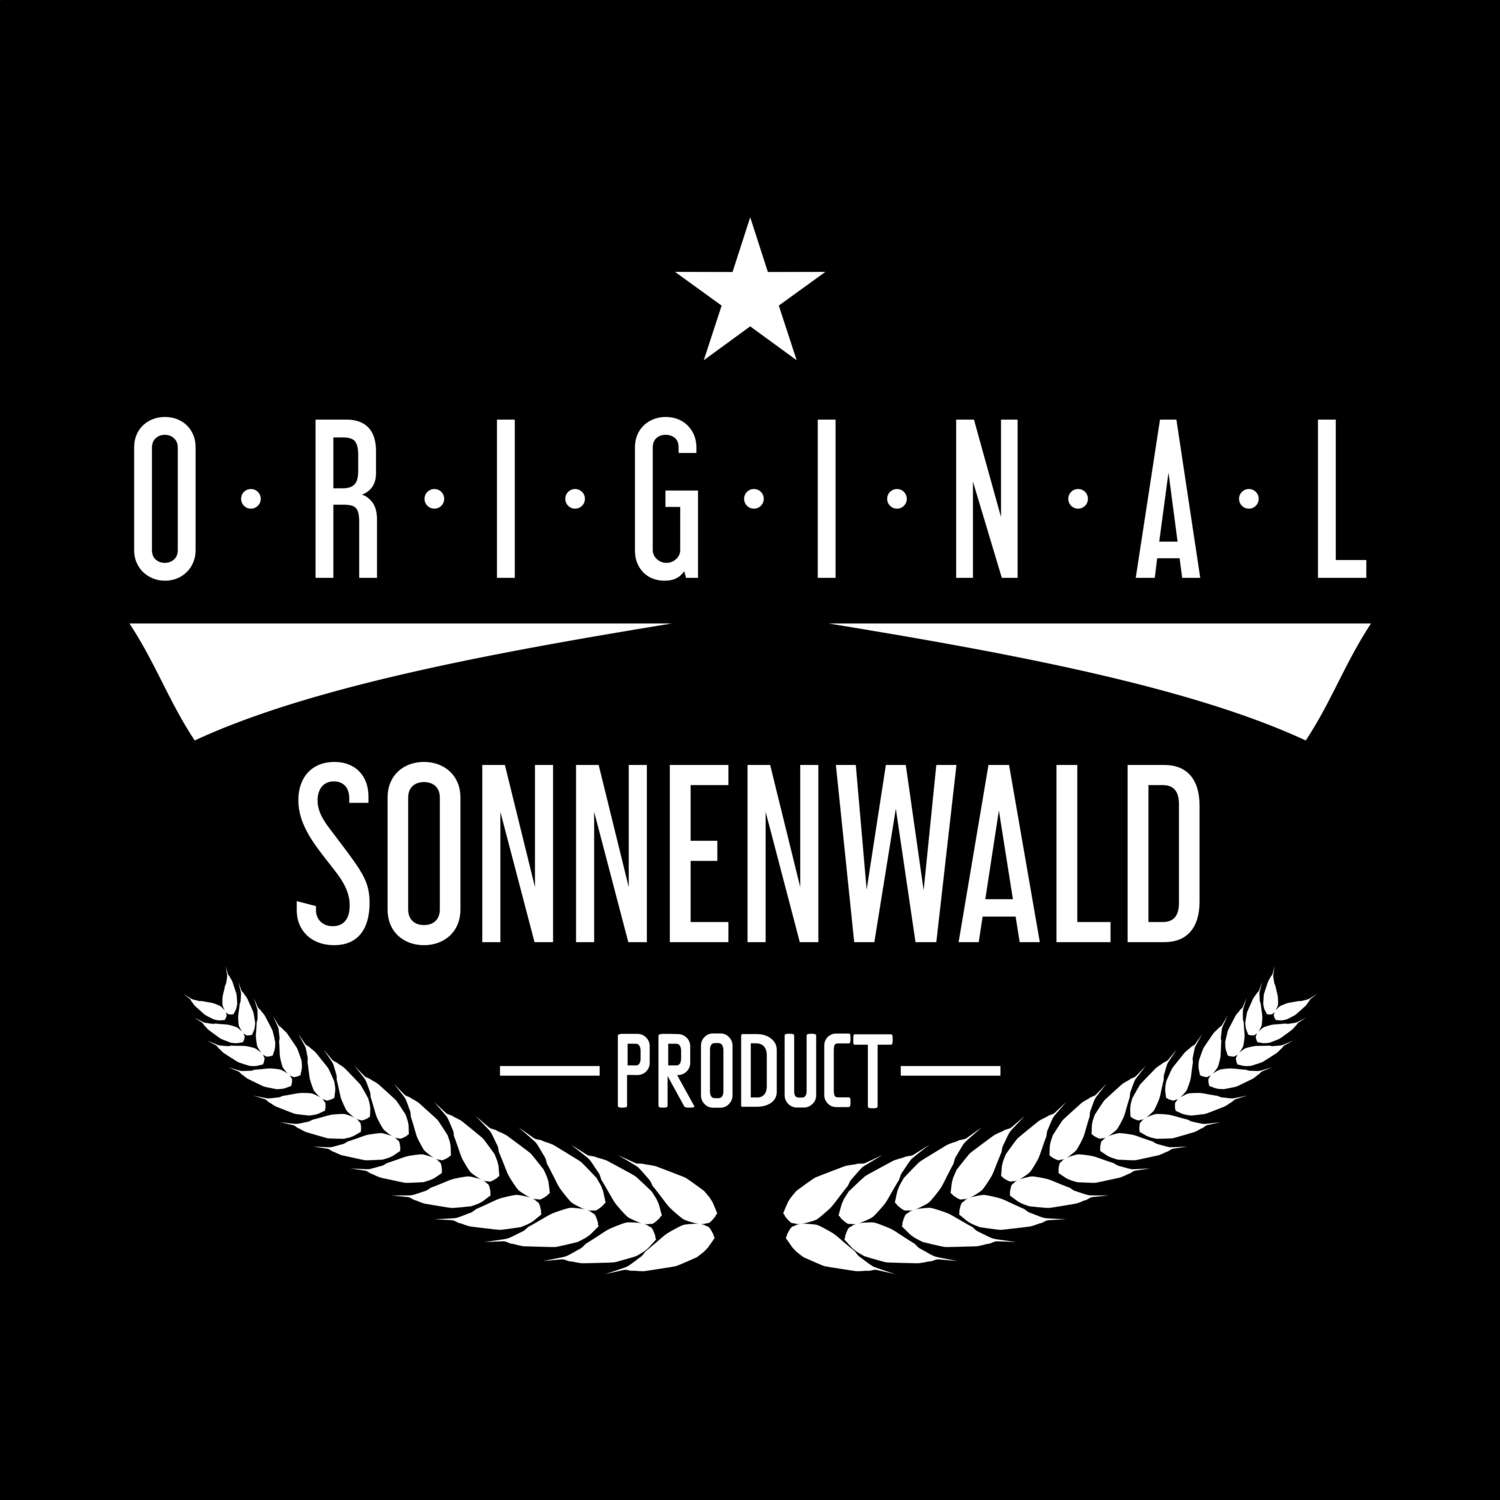 Sonnenwald T-Shirt »Original Product«